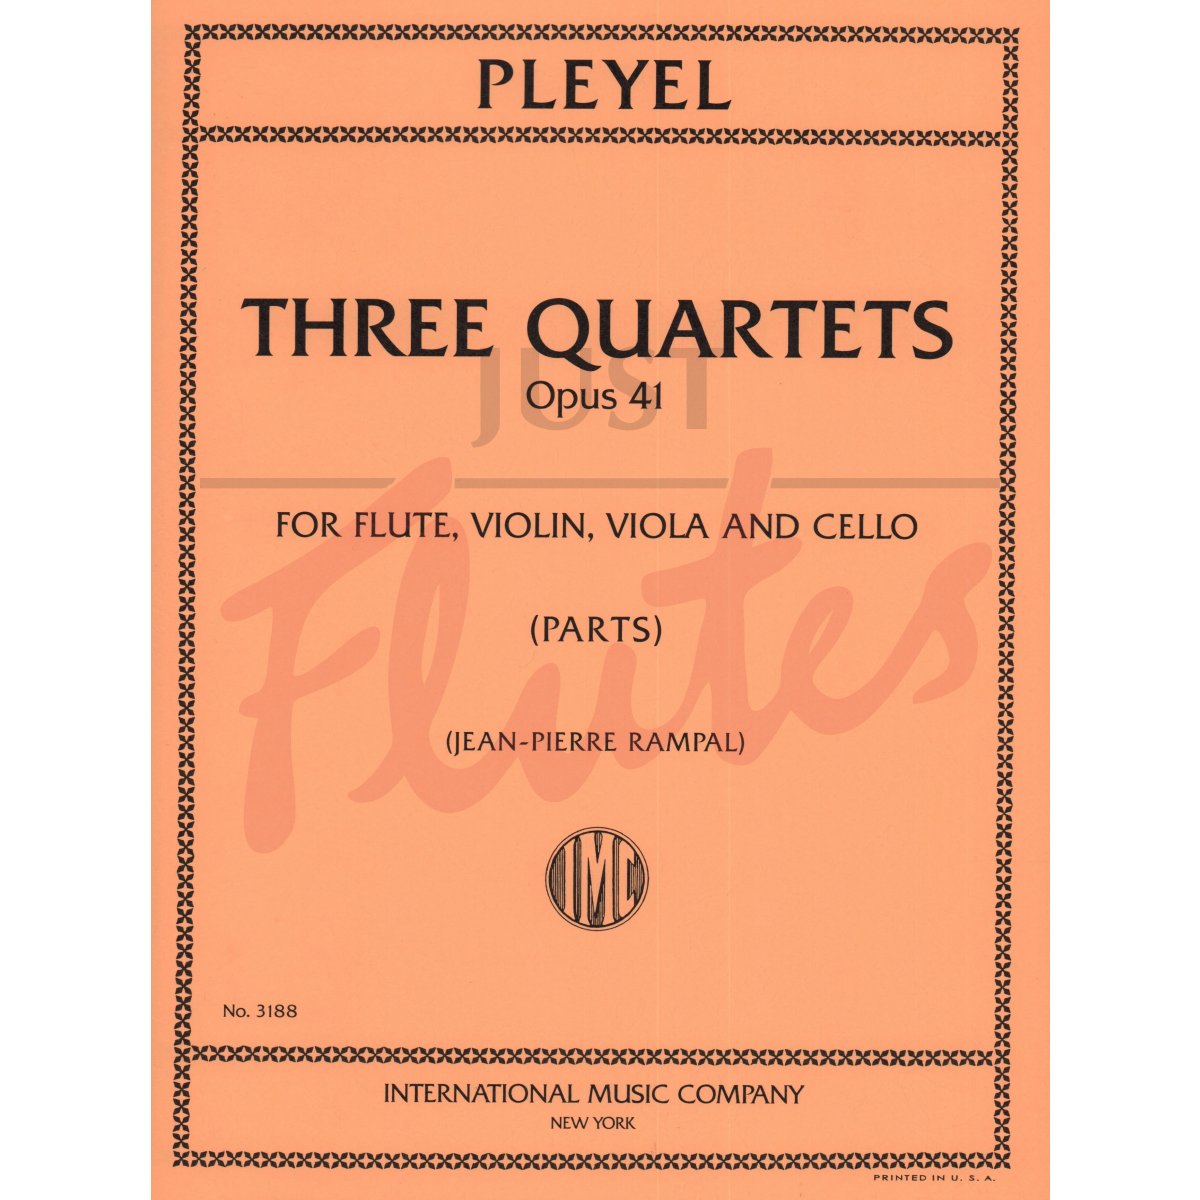 Three Quartets for Flute, Violin, Viola, and Cello